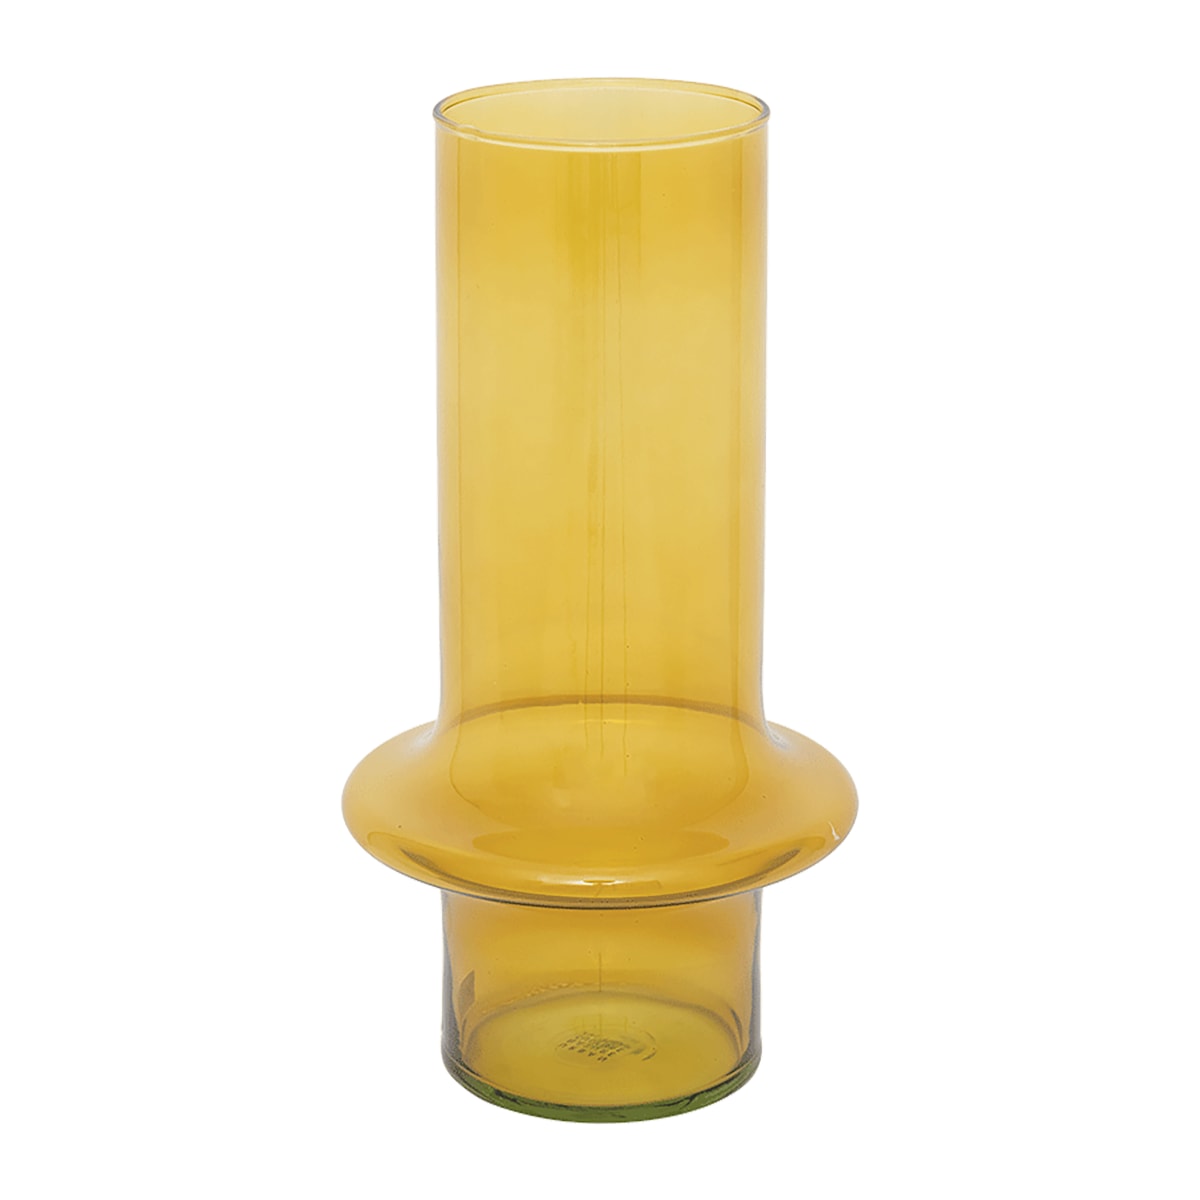 Toni - Vase aus recyceltem Glas